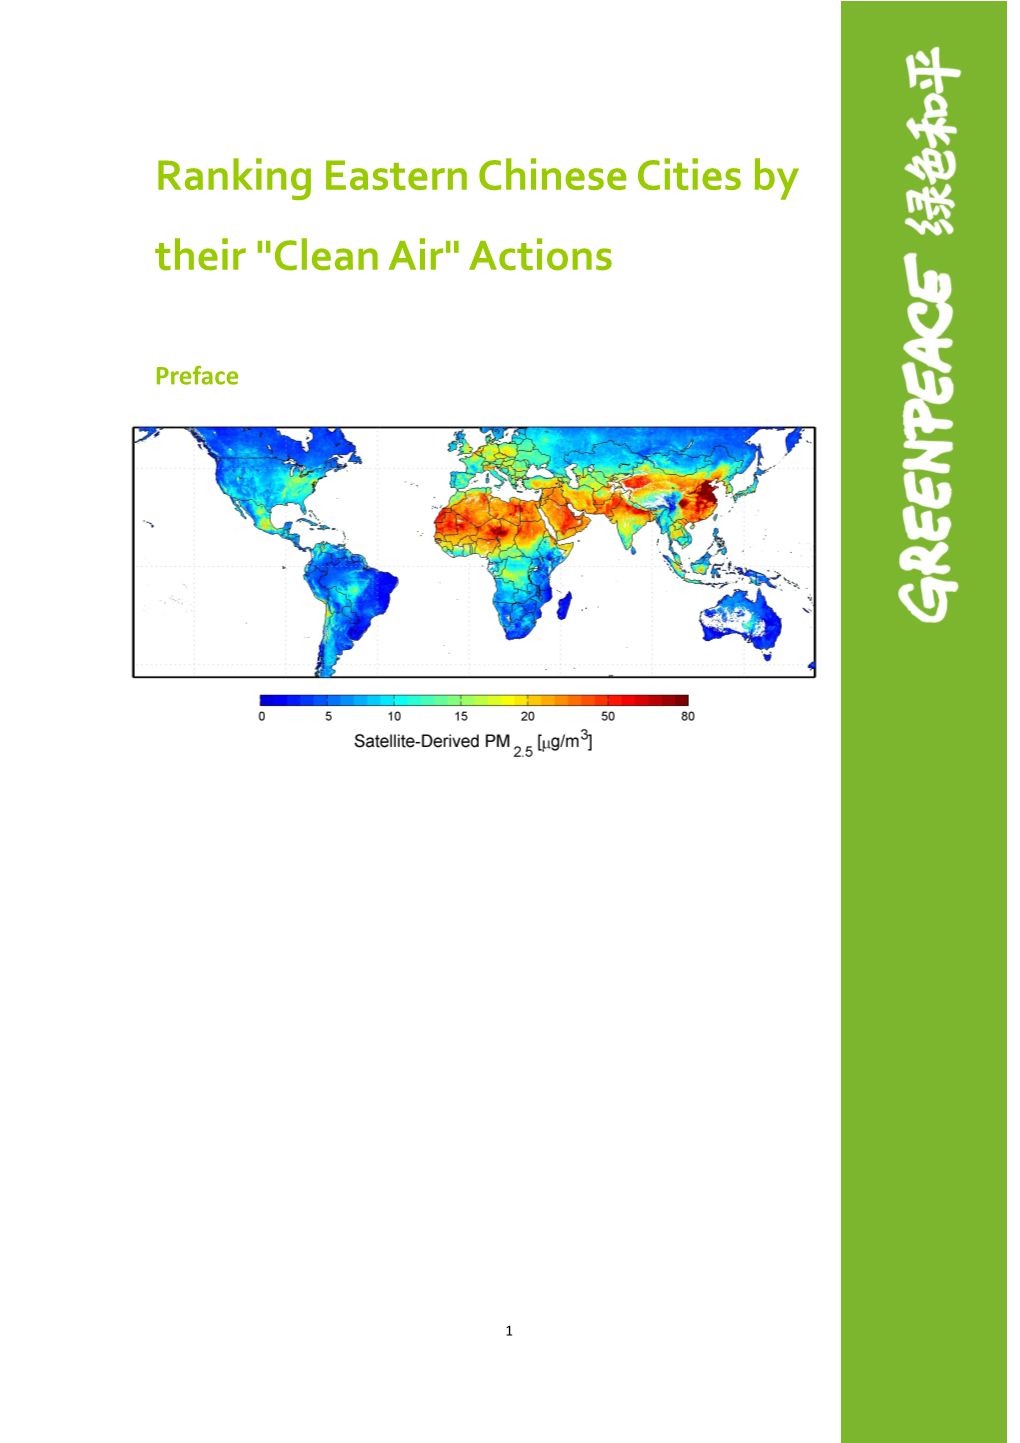 Figure 1: Global PM2.5 Aerosol Vertical Accumulation Distribution Map 1